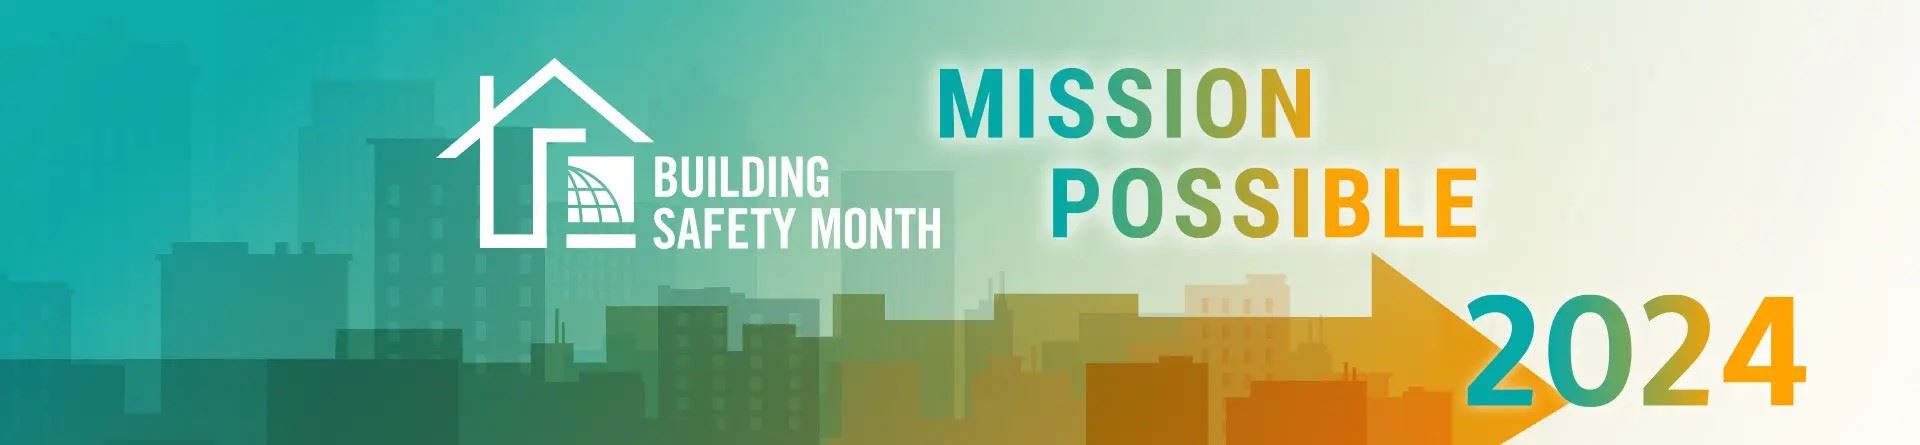 2024 Building Safety Month Website Banner, Mission Possible